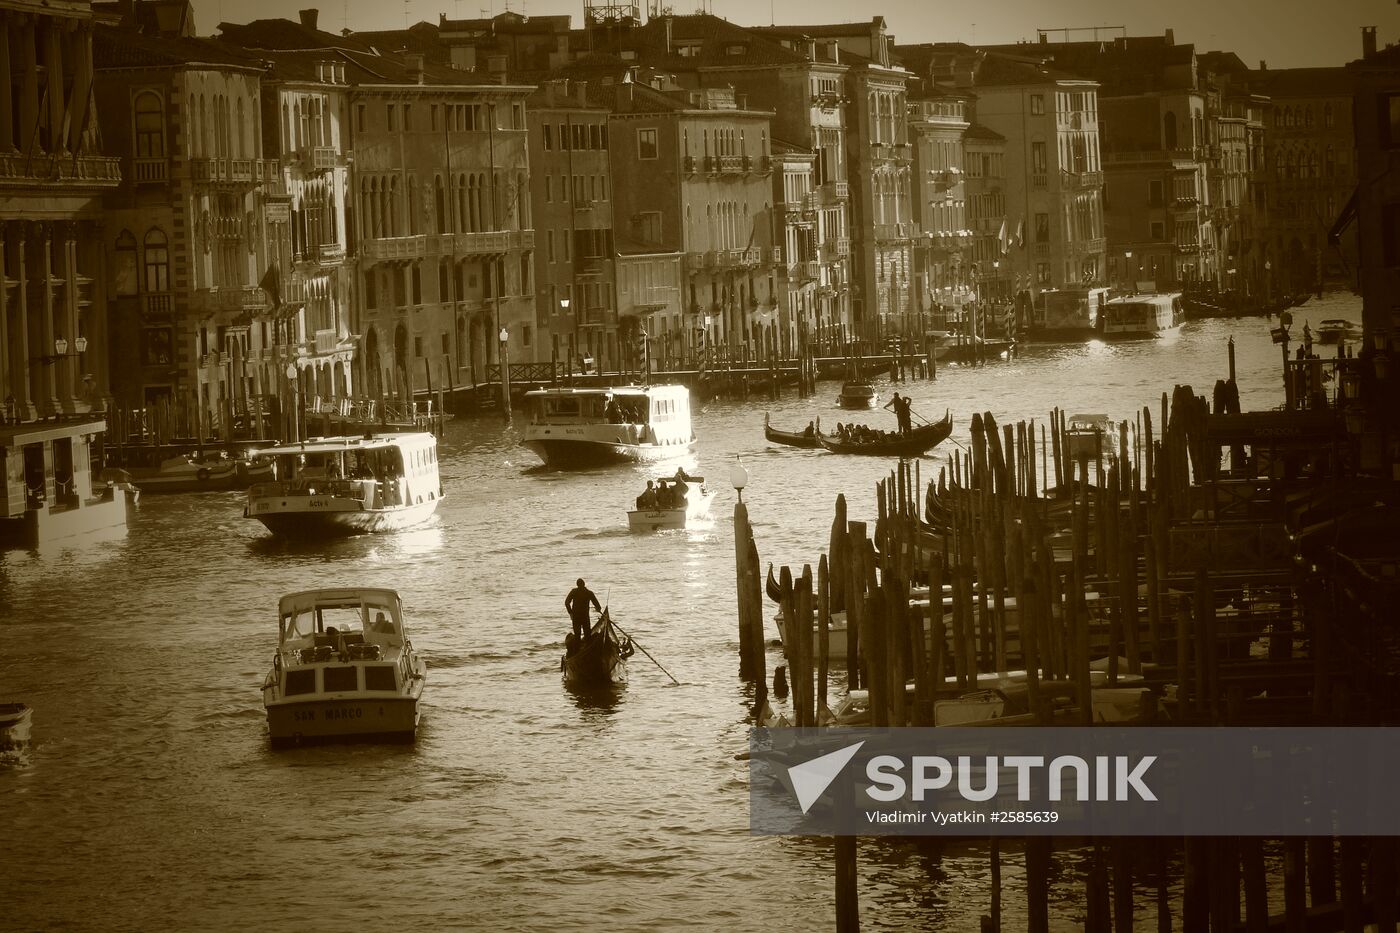 Cities of the world. Venice